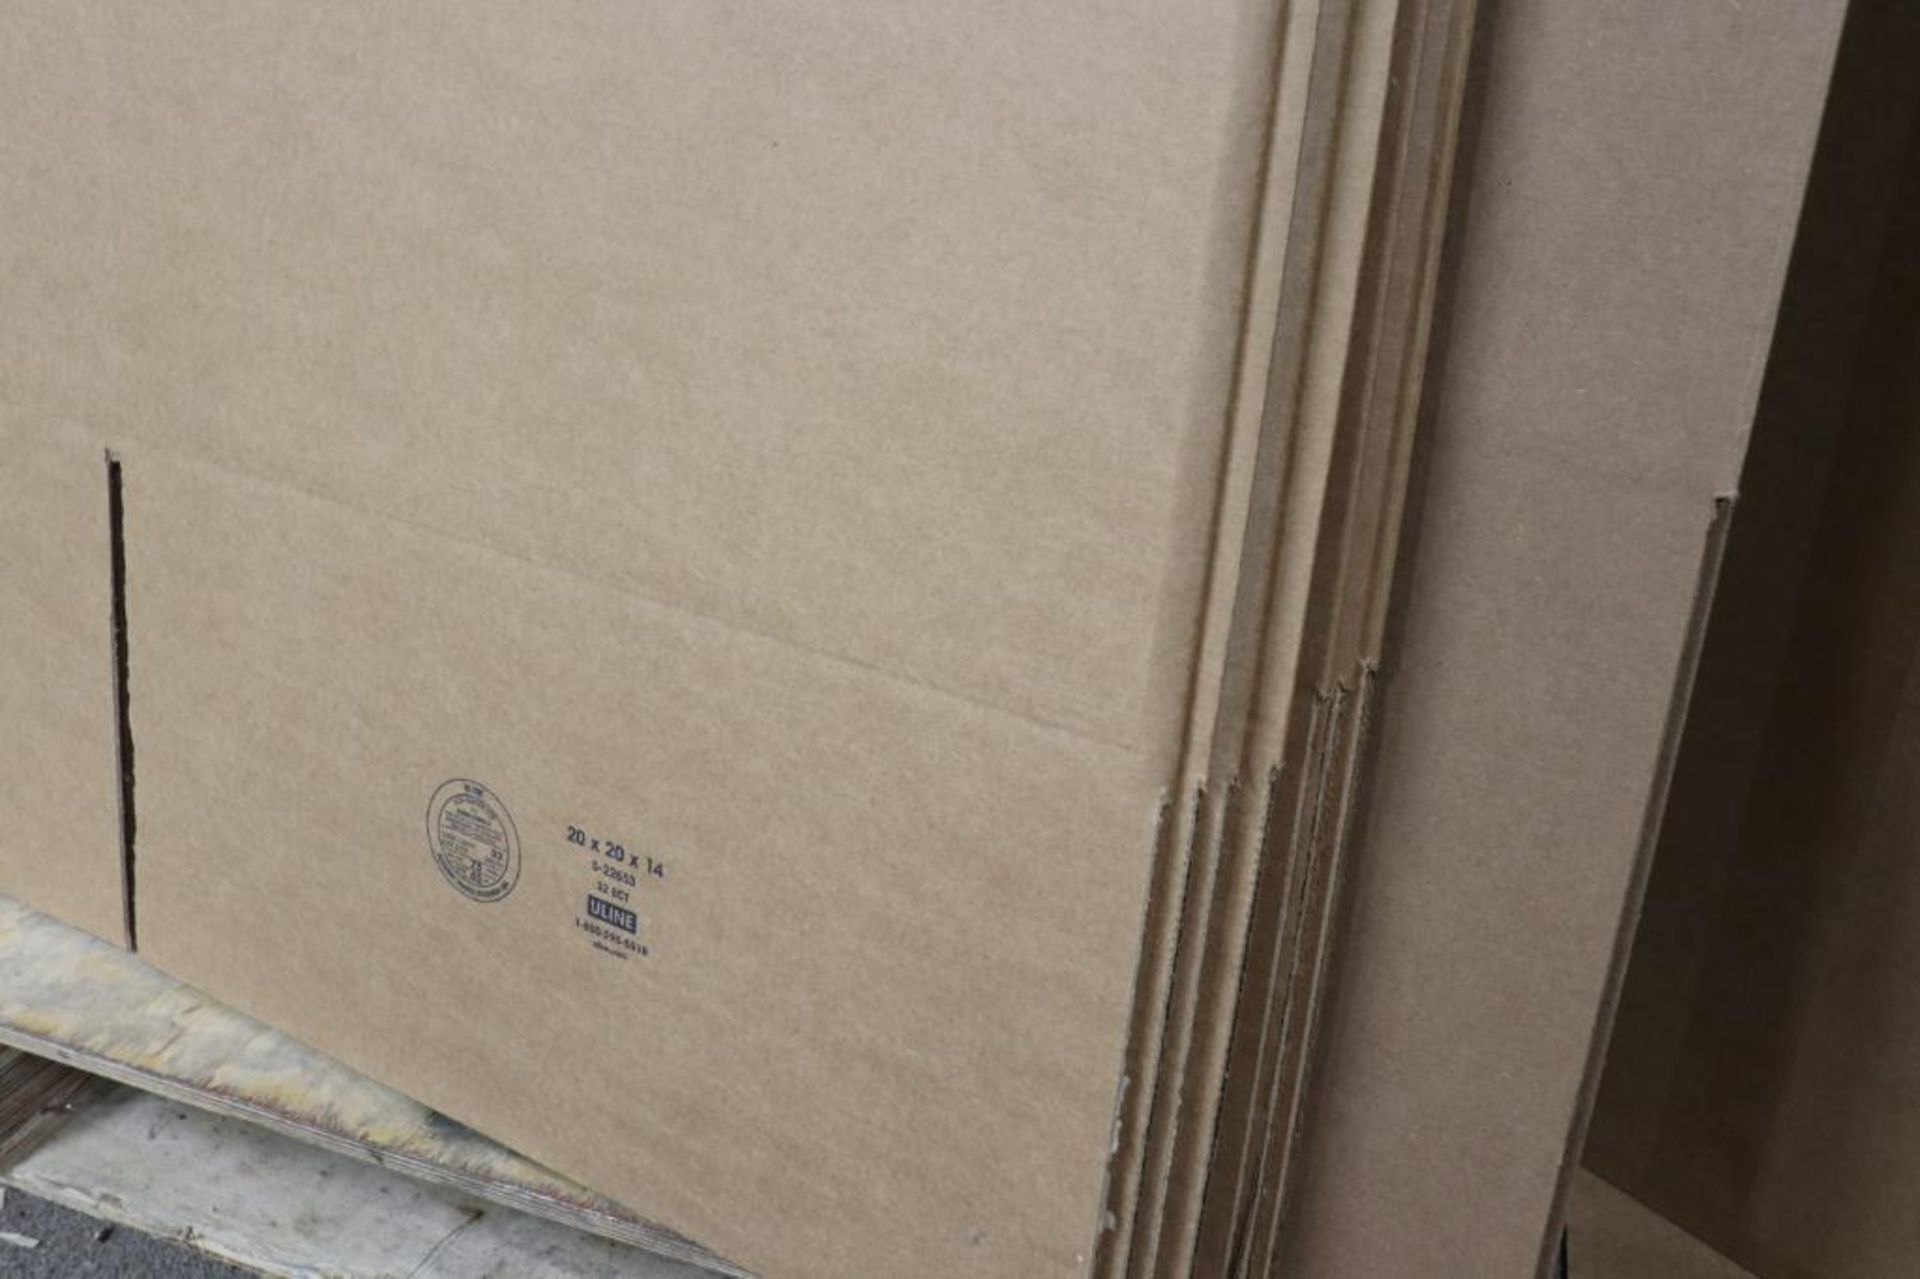 Uline cardboard boxes - Image 18 of 25